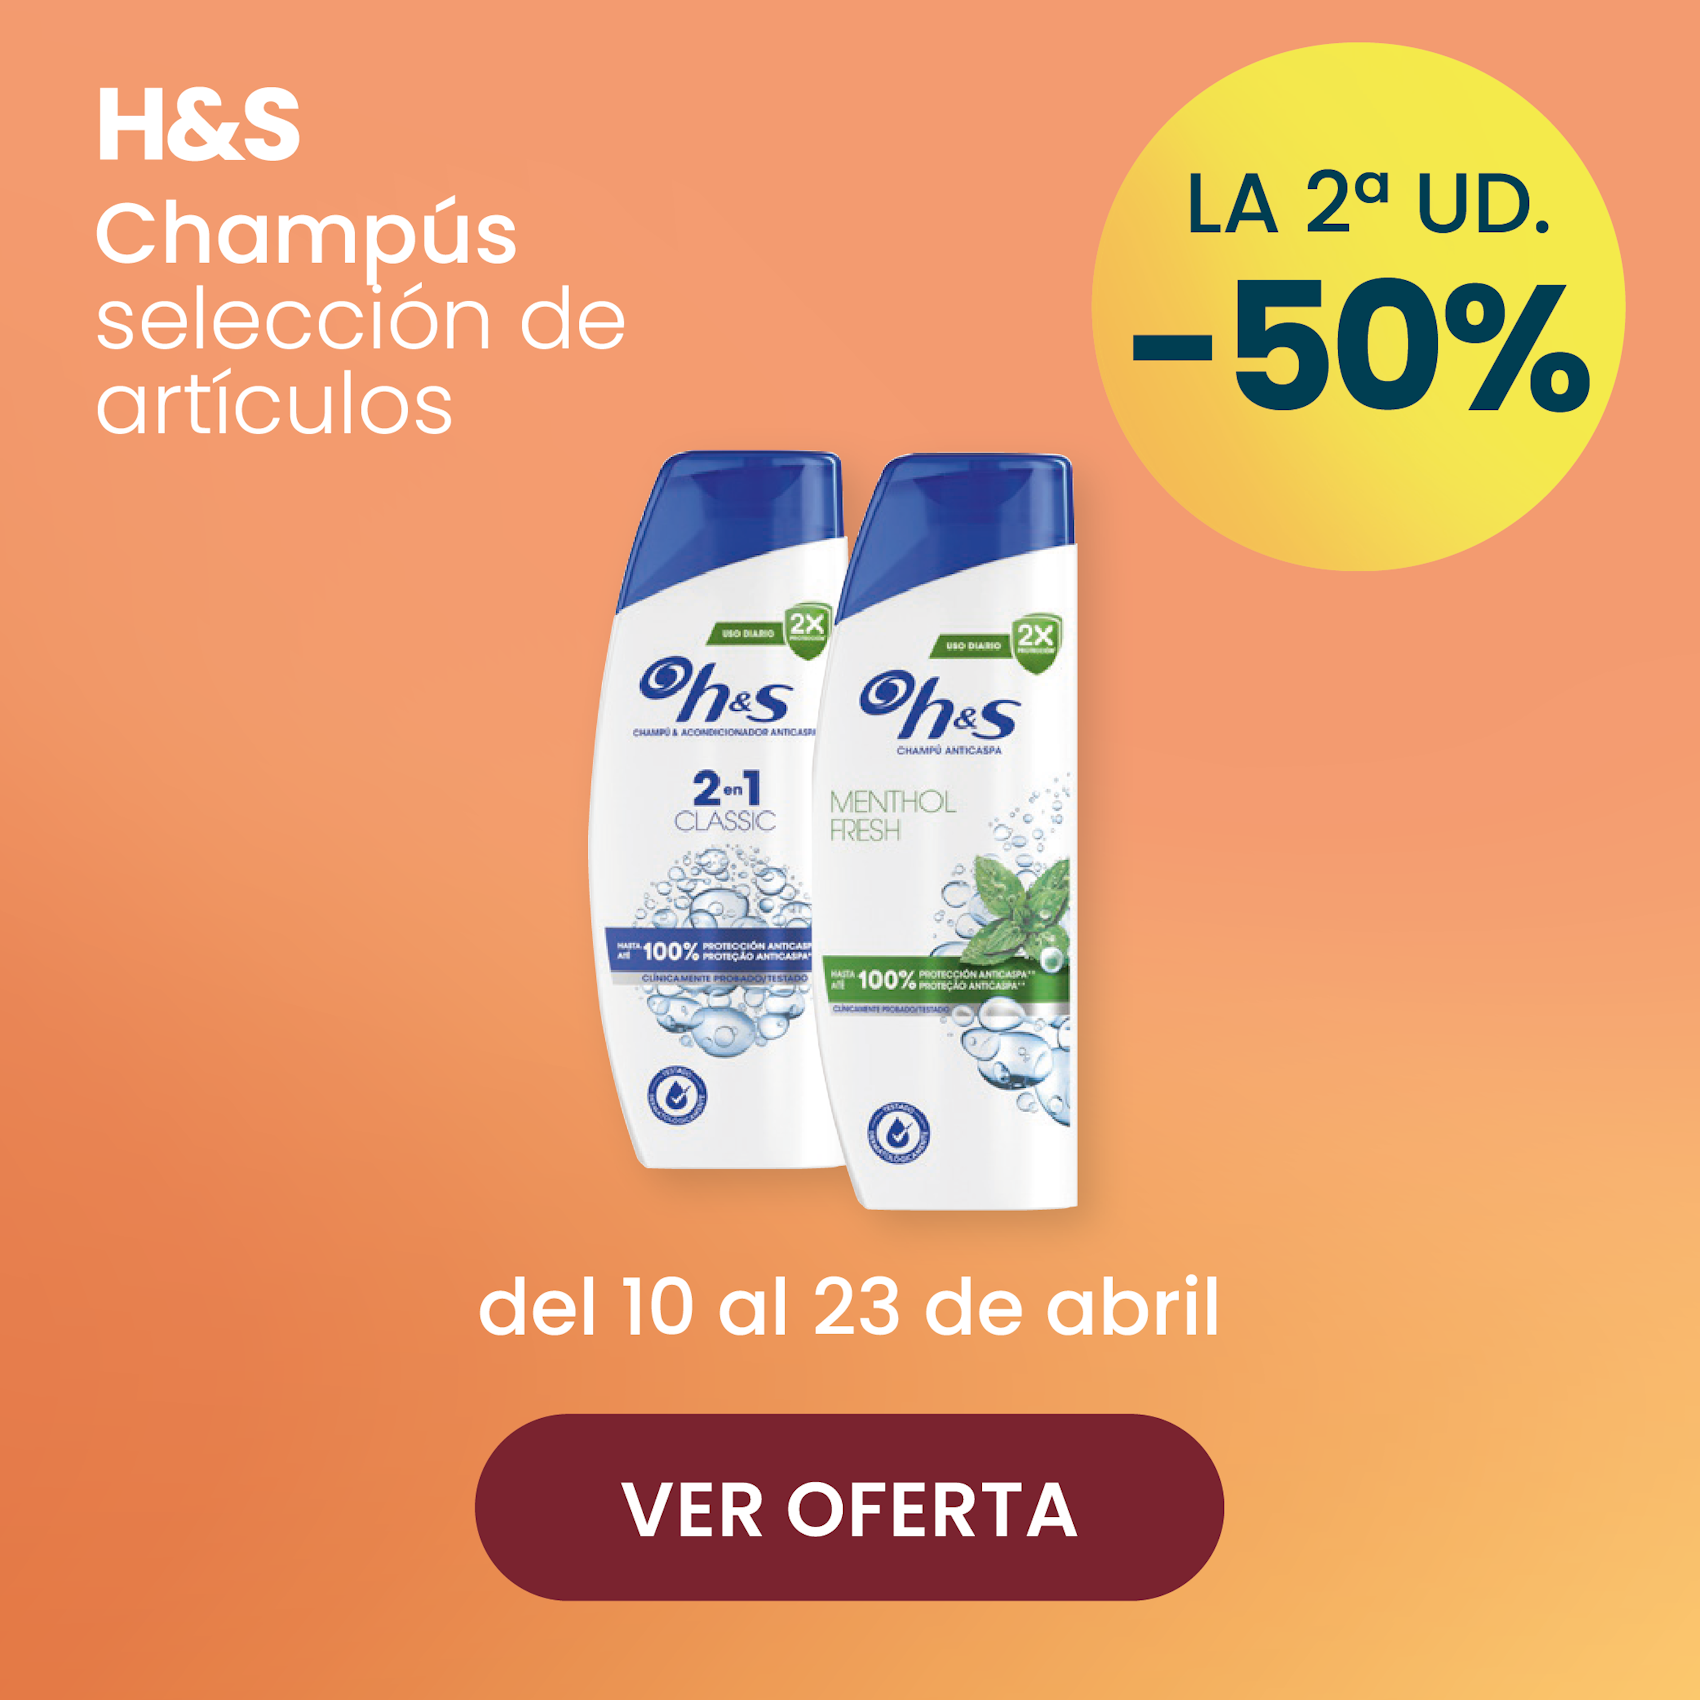 H&S CHAMPÚS TODA LA GAMA -50% la 2ª ud.